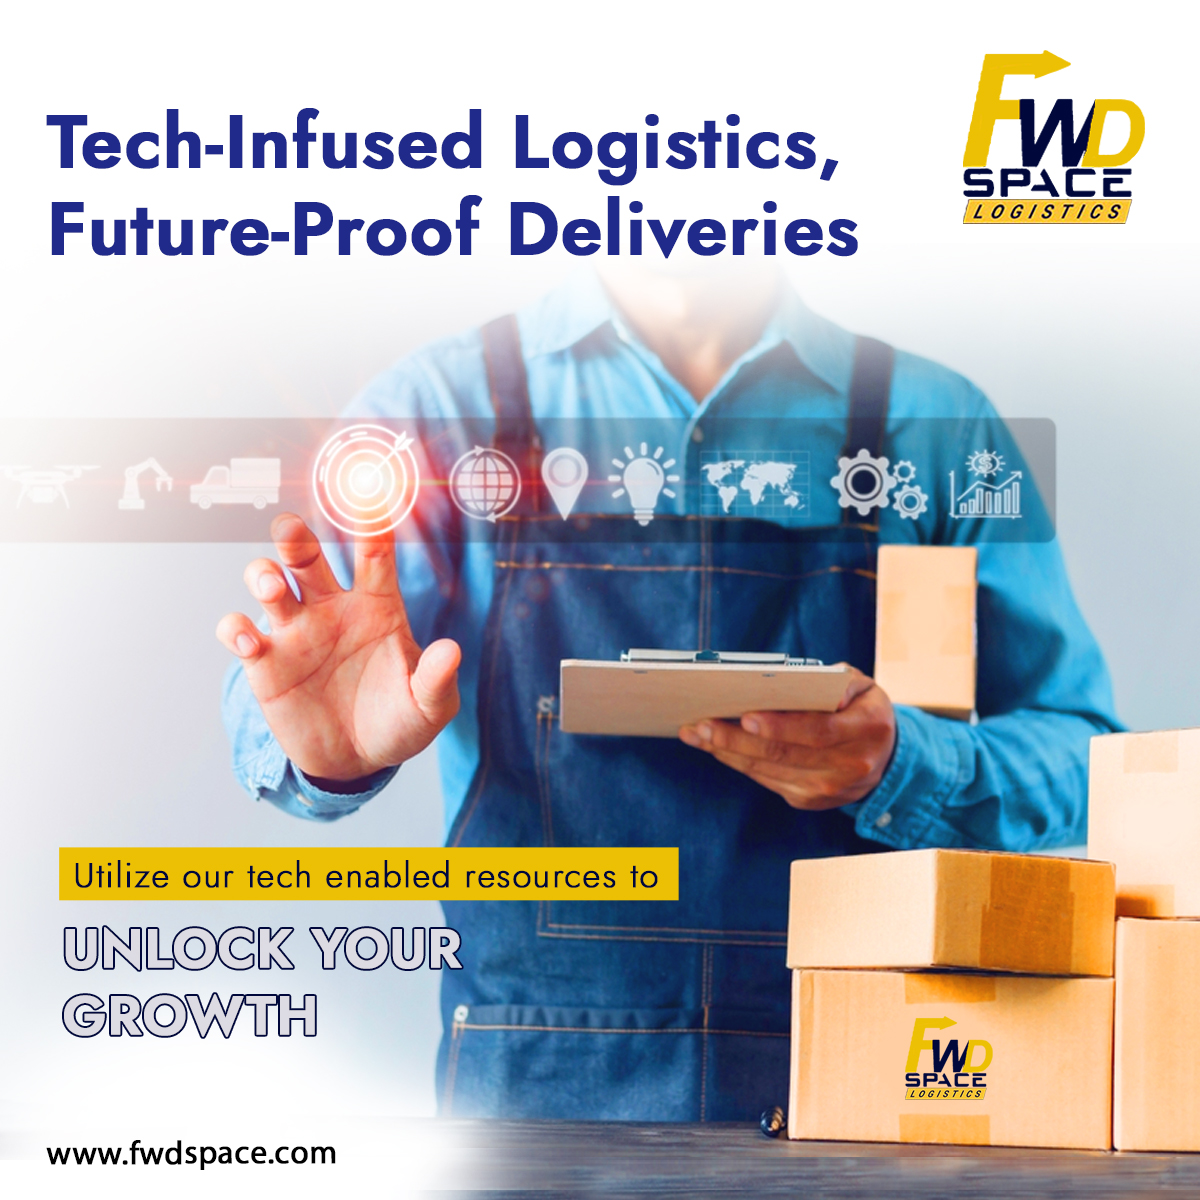 Tech-Infused Logistics,
Future-Proof Deliveries

Cc
LOGISTICS

   

www.fwdspace.com